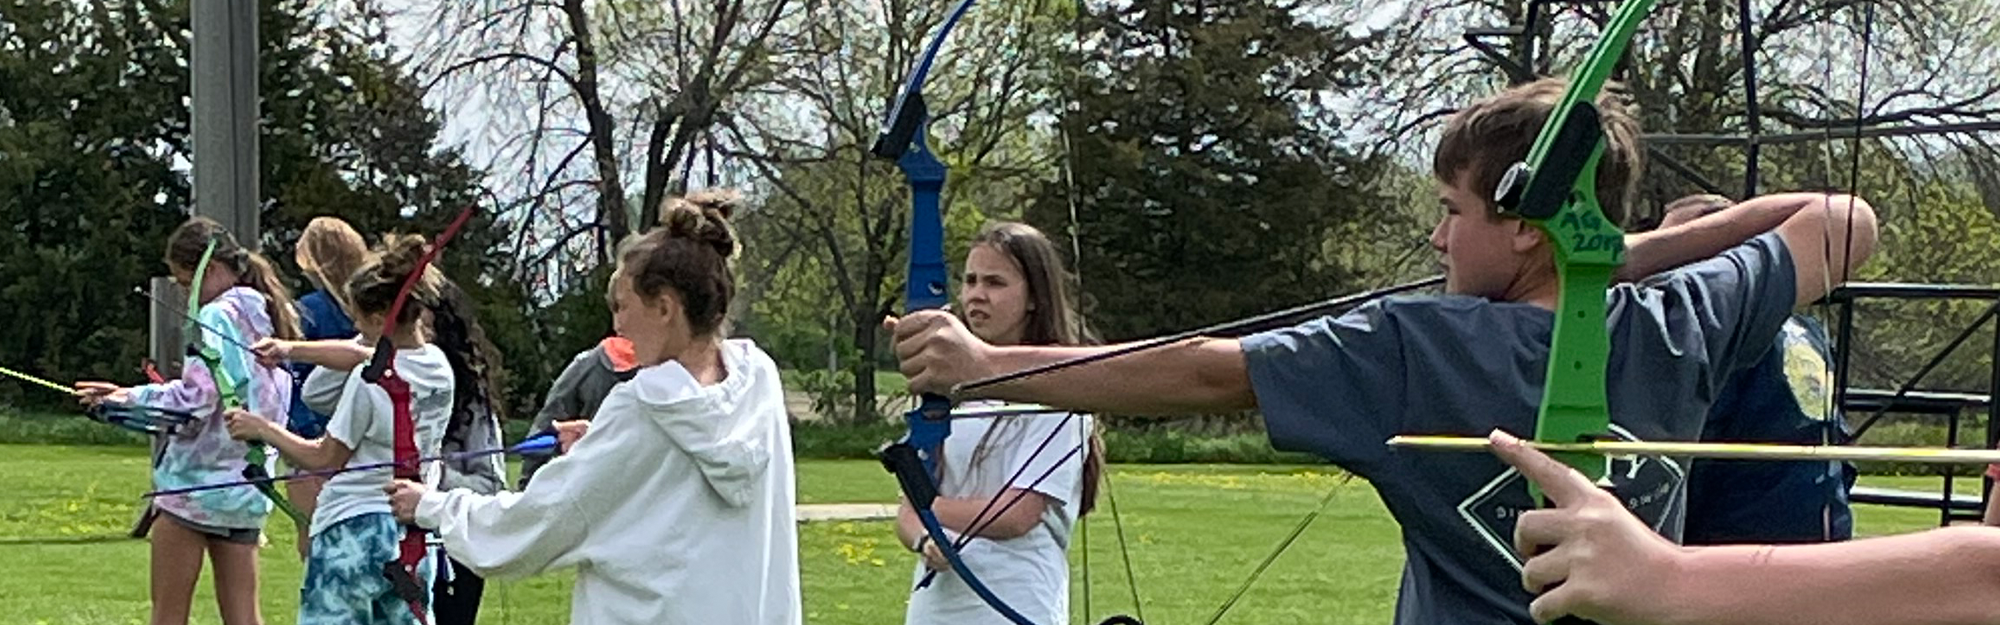 Student Archery